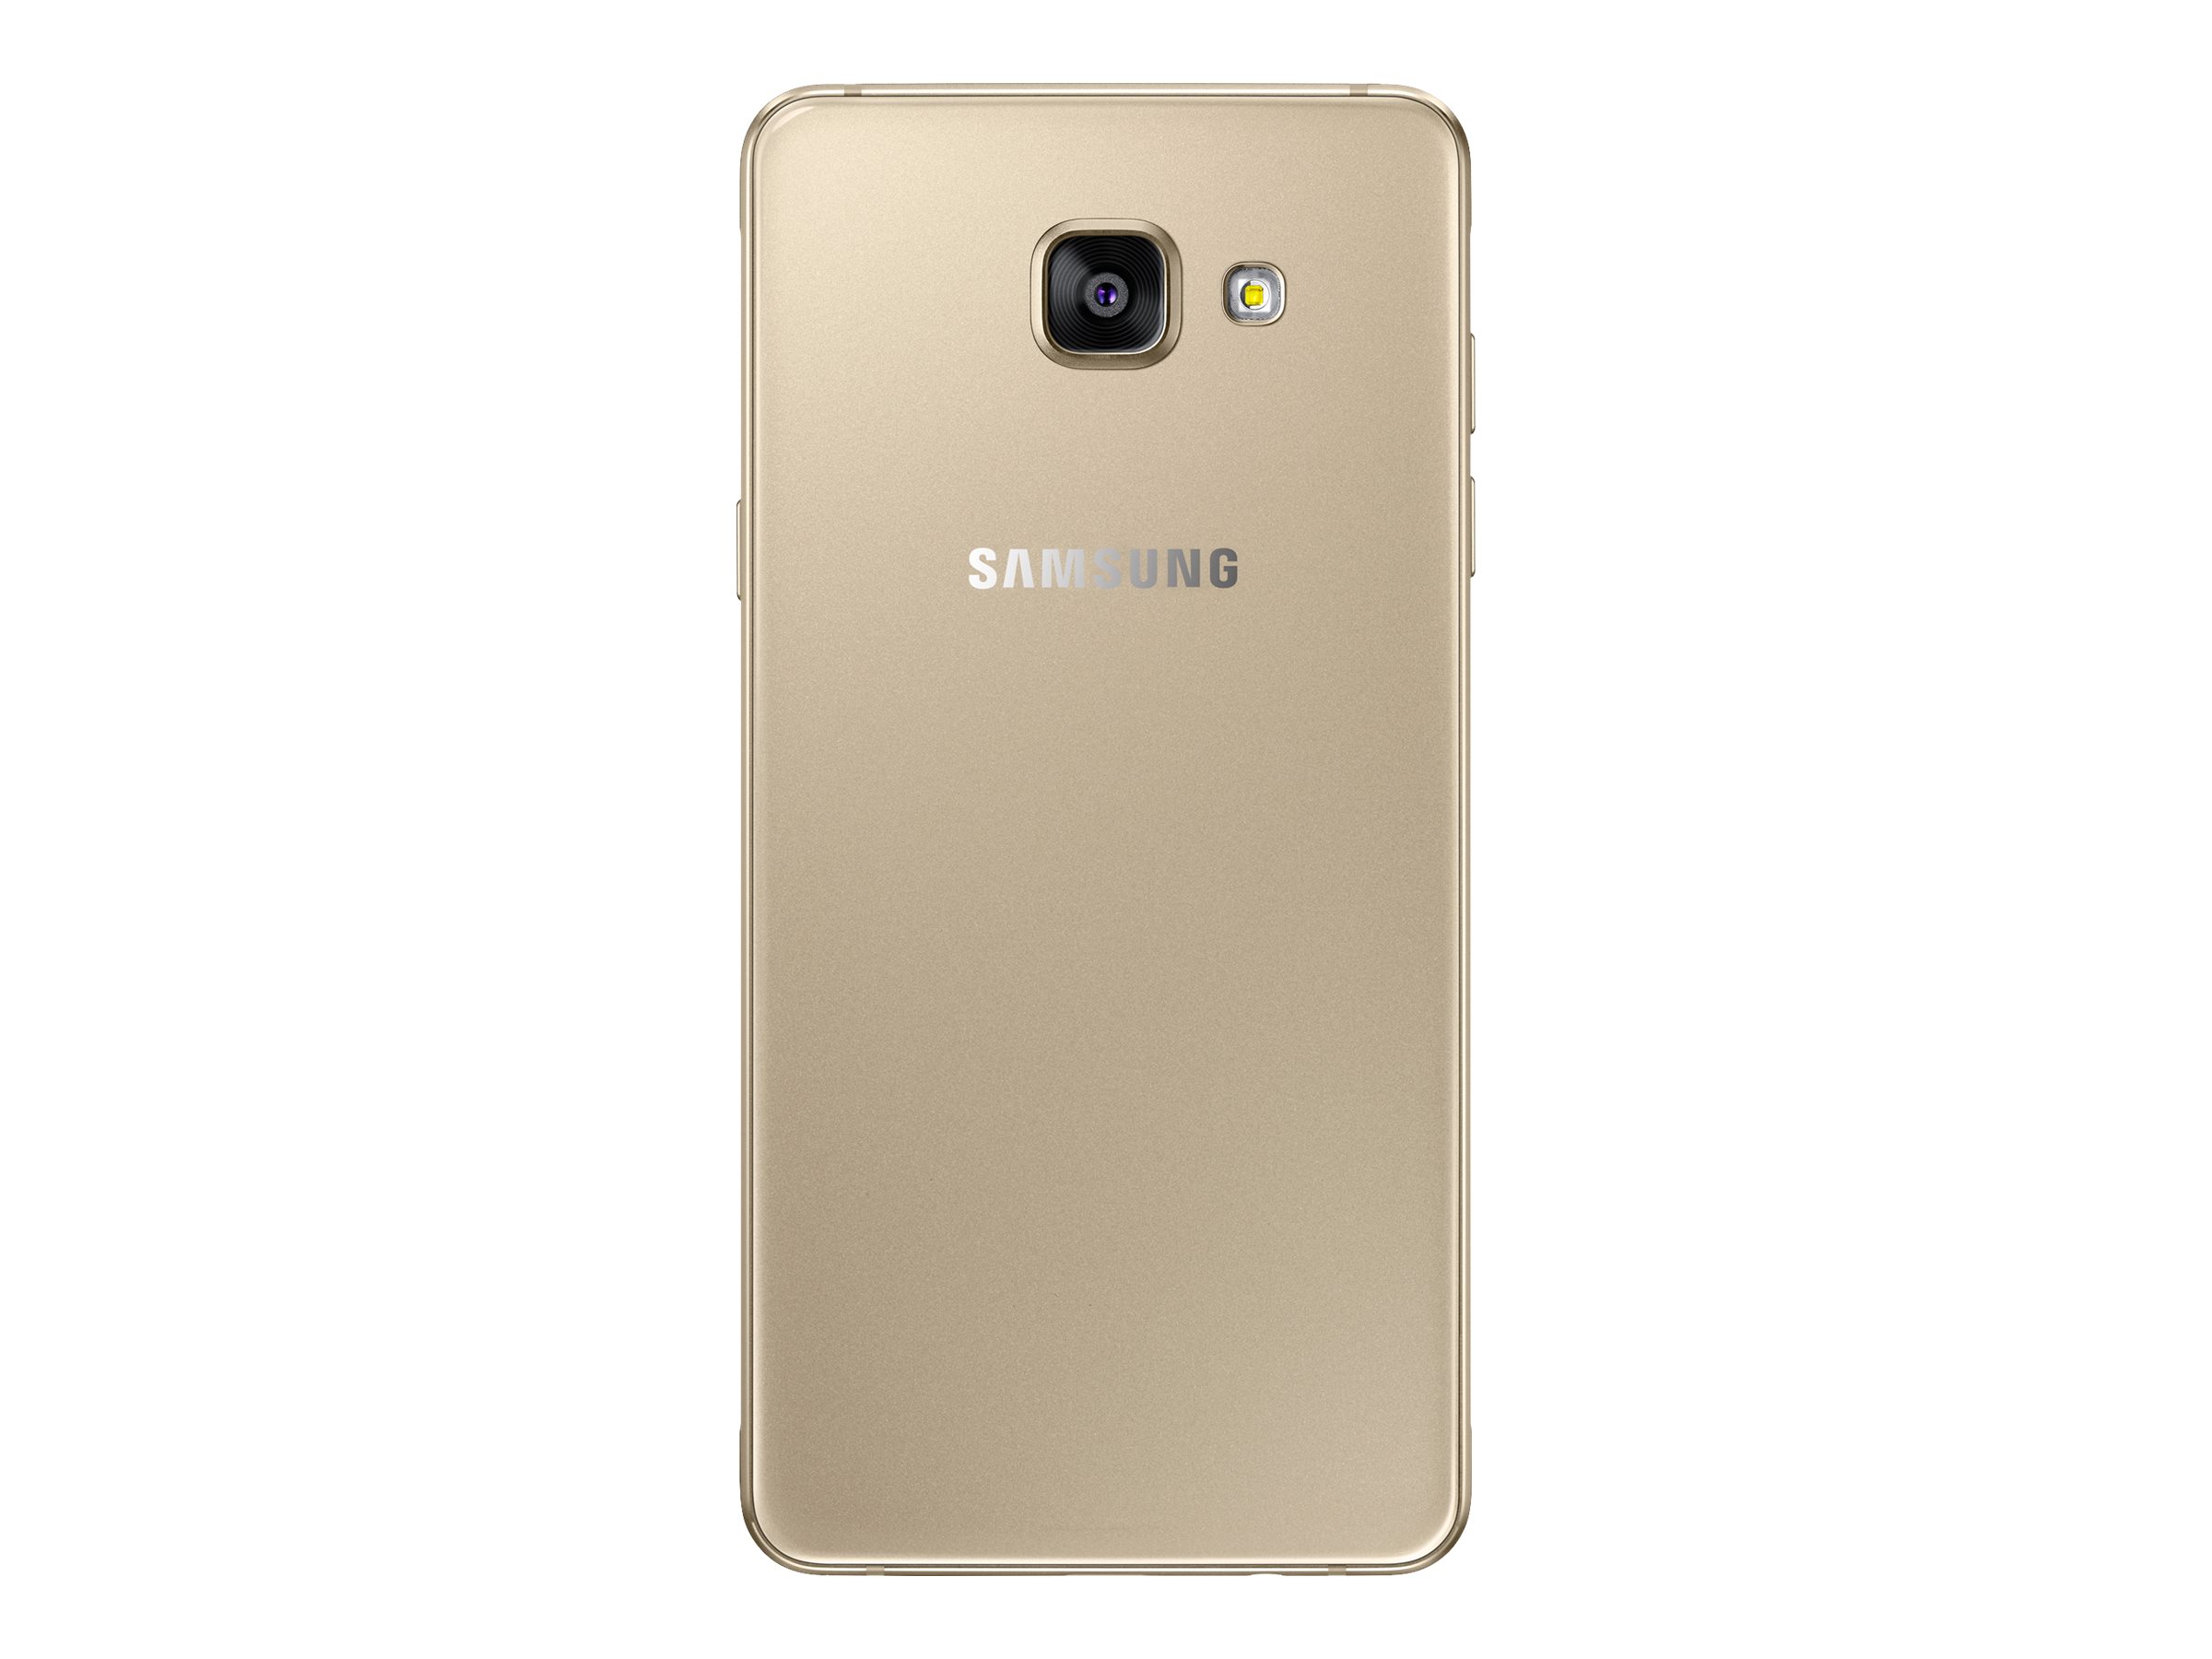 Samsung Galaxy A5 (2016) - 4G smartphone - dual-SIM - RAM 2 GB / Internal Memory 16 GB - microSD slot - OLED display - 5.2" - 1920 x 1080 pixels - rear camera 13 MP - front camera 5 MP - gold - image 4 of 6